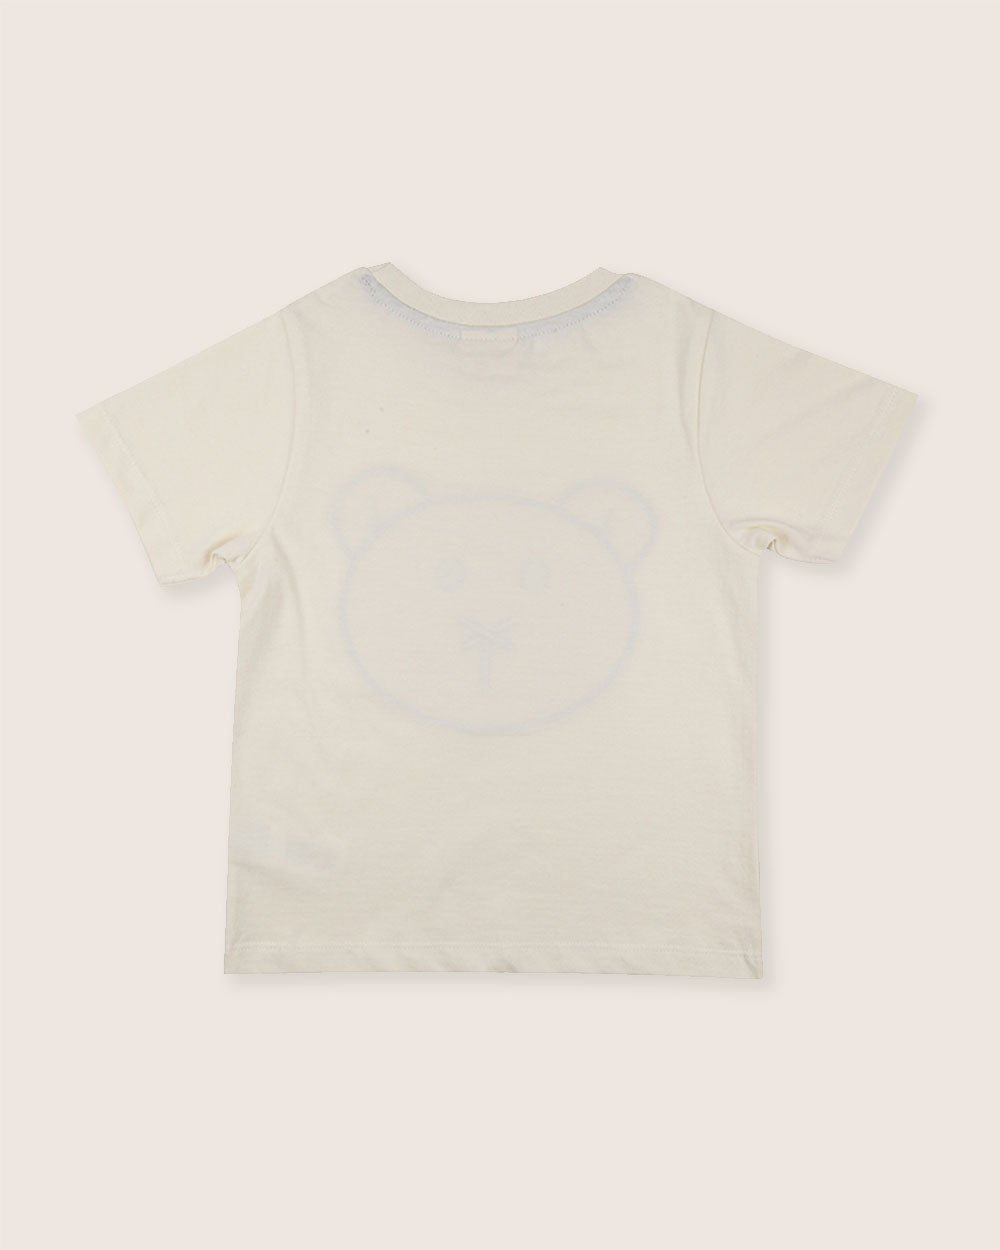 Nep Applique Bear T-Shirt